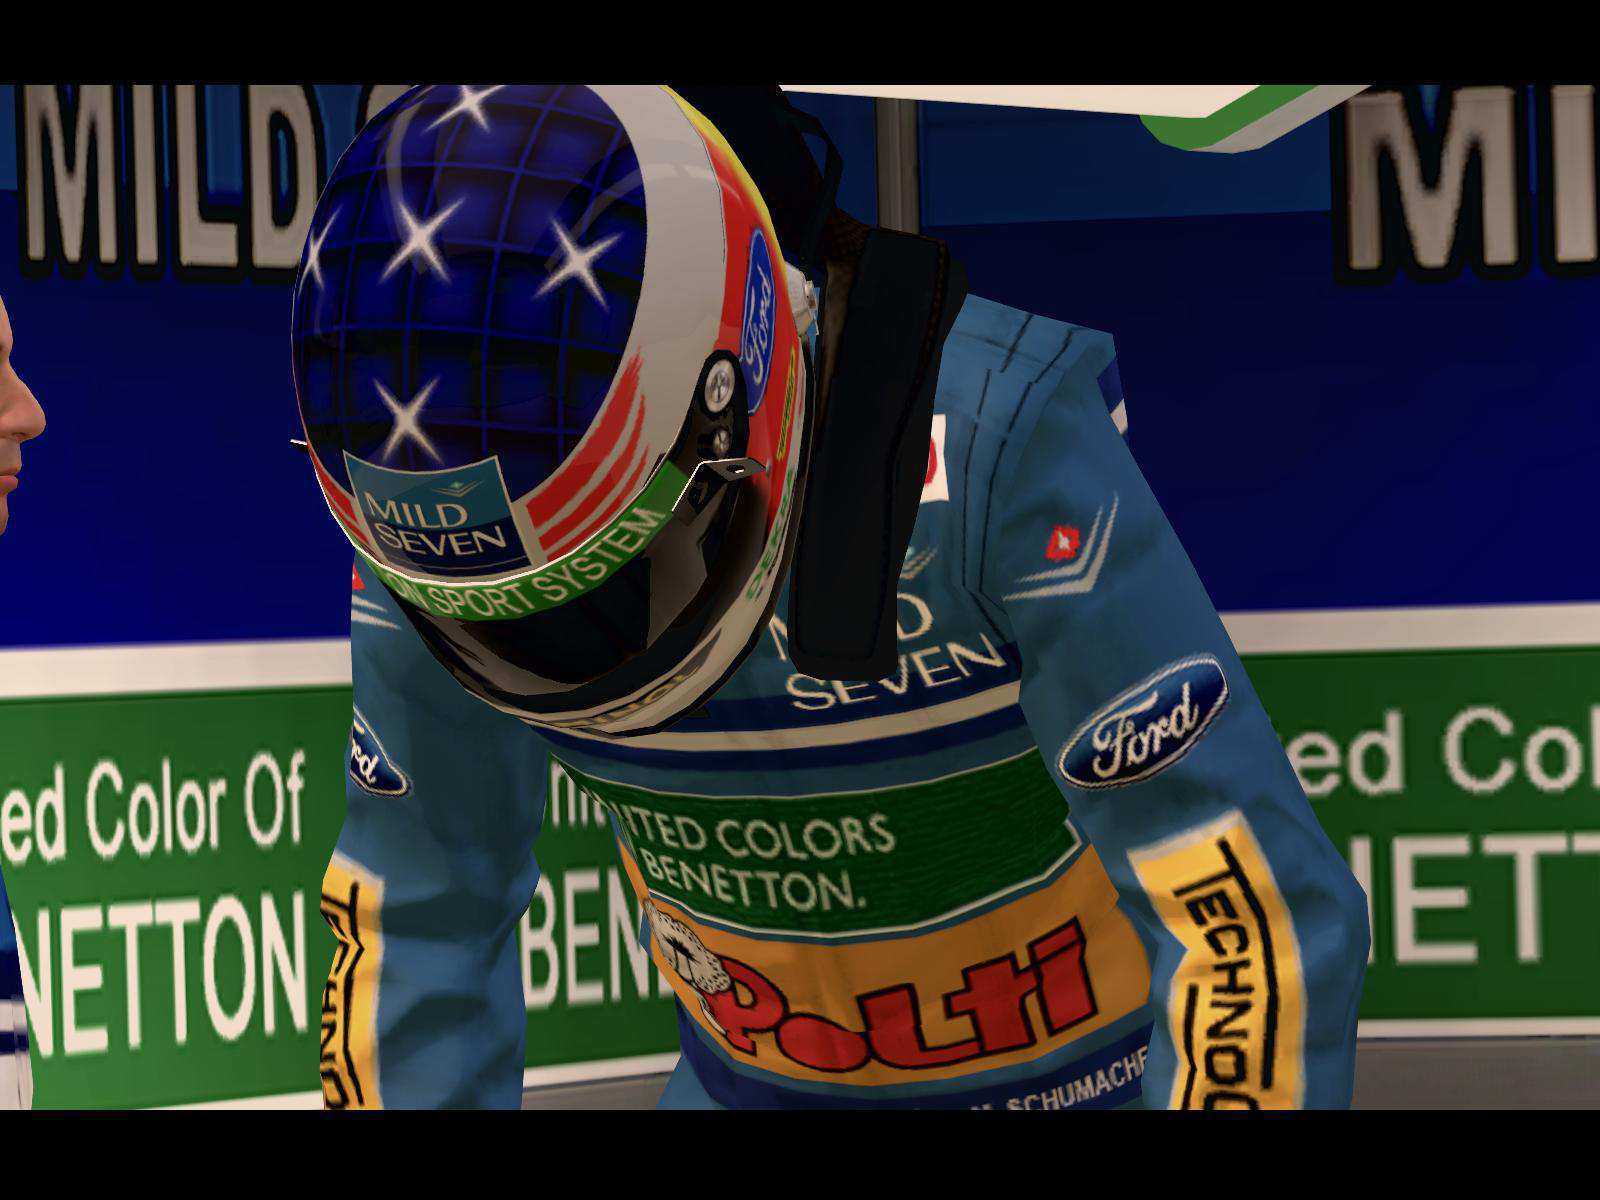 Screen_Benetton_1994_7-M.jpg